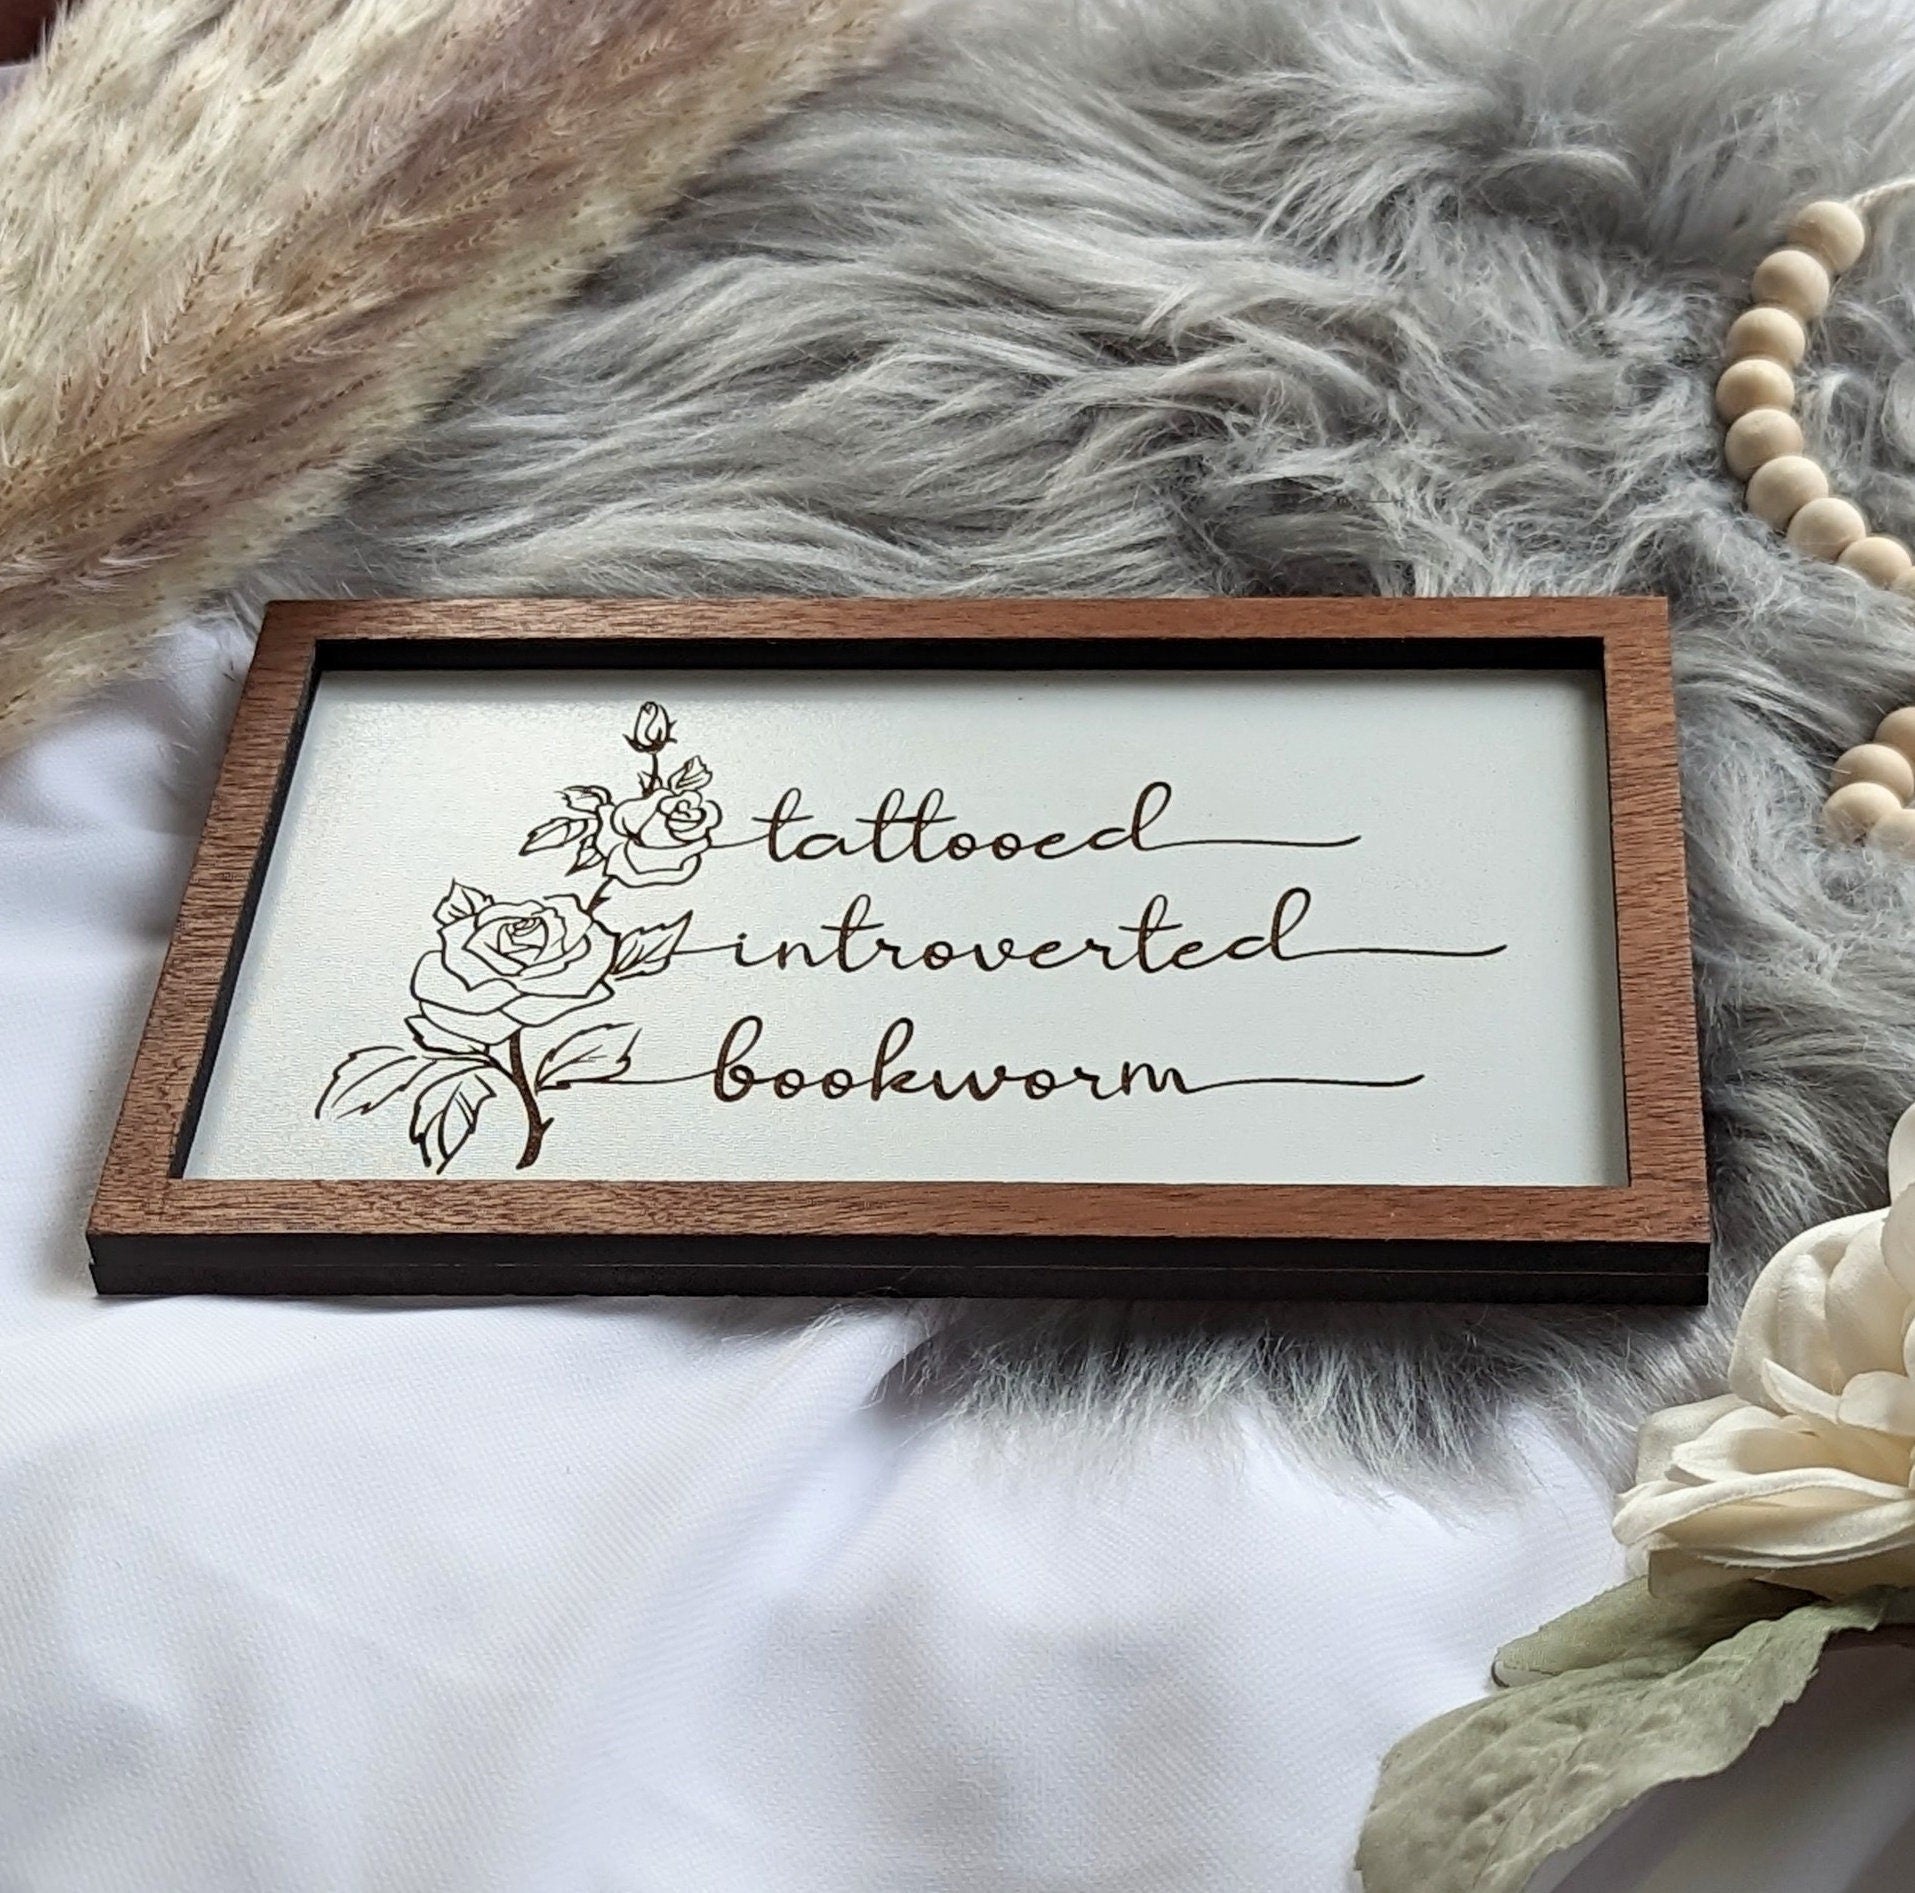 Tattooed Introverted Bookworm | Wooden Bookshelf Sign - Quill & Cauldron